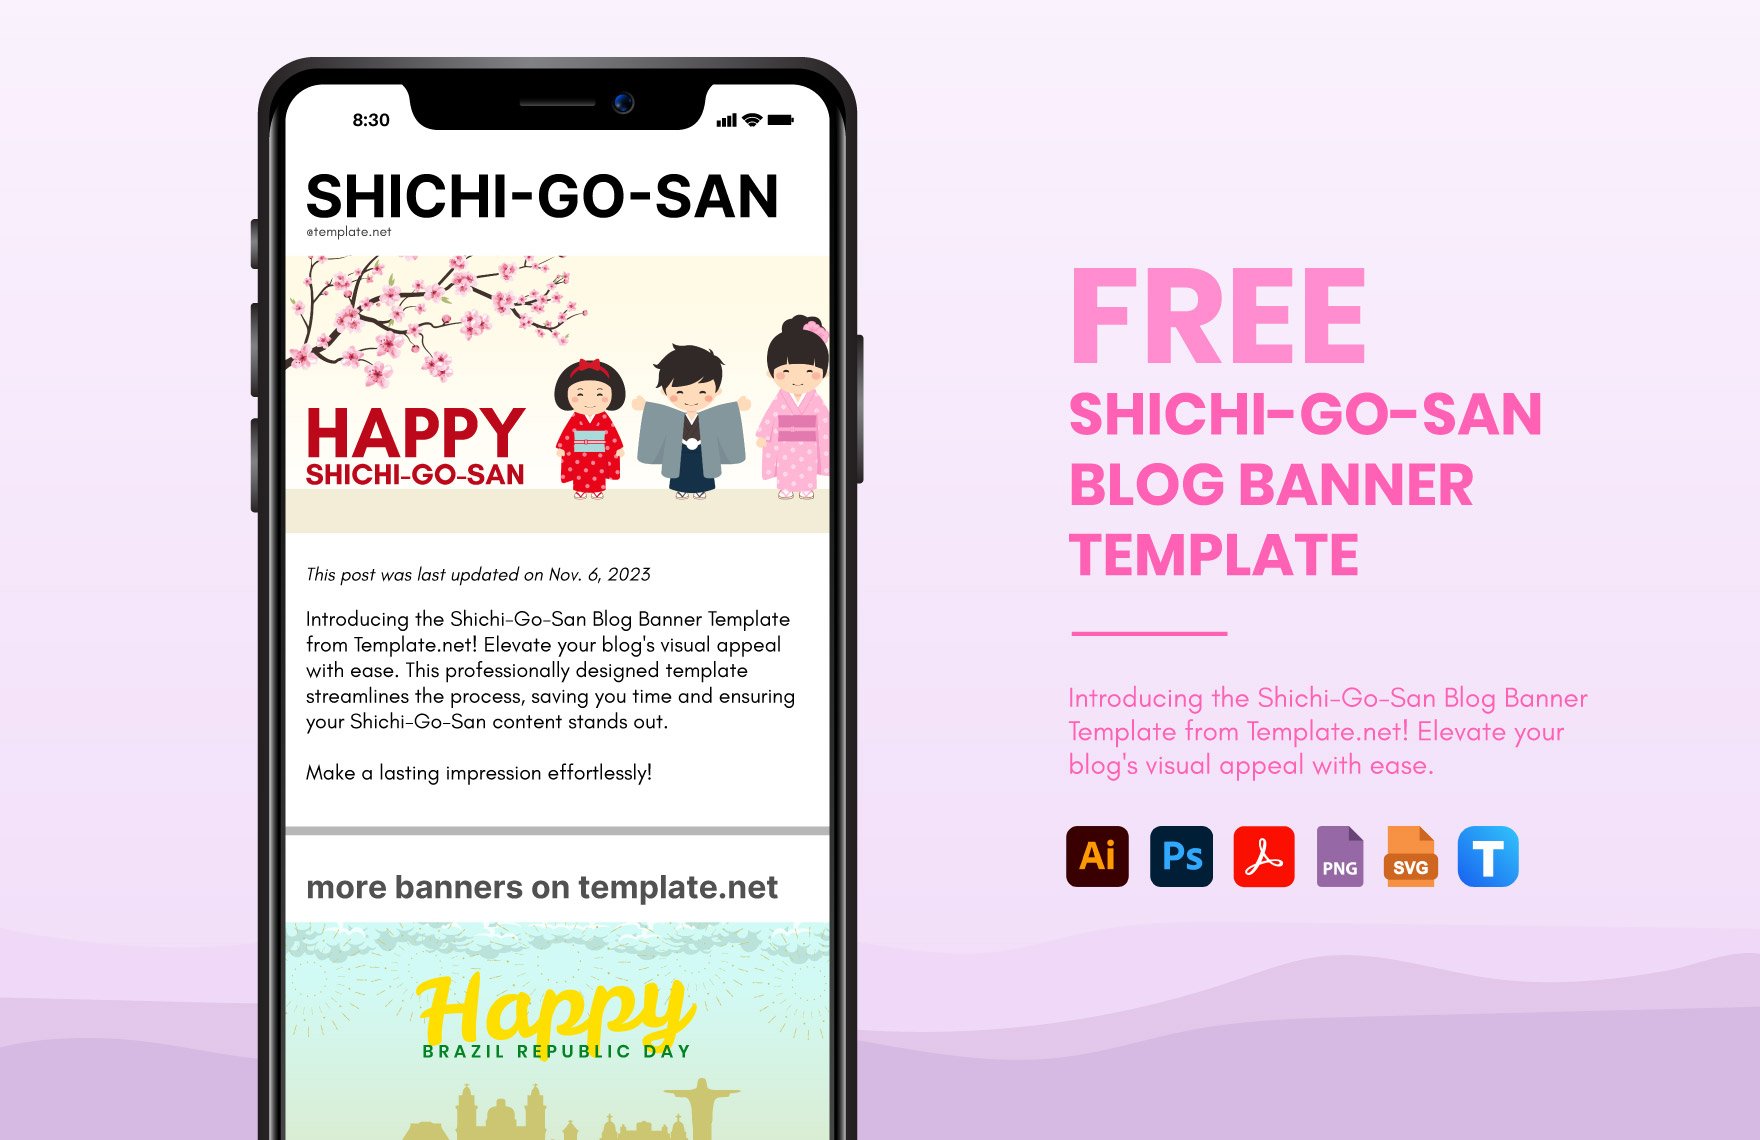 Free Shi chi-Go-San Blog Banner Template in PDF, Illustrator, PSD, SVG, PNG